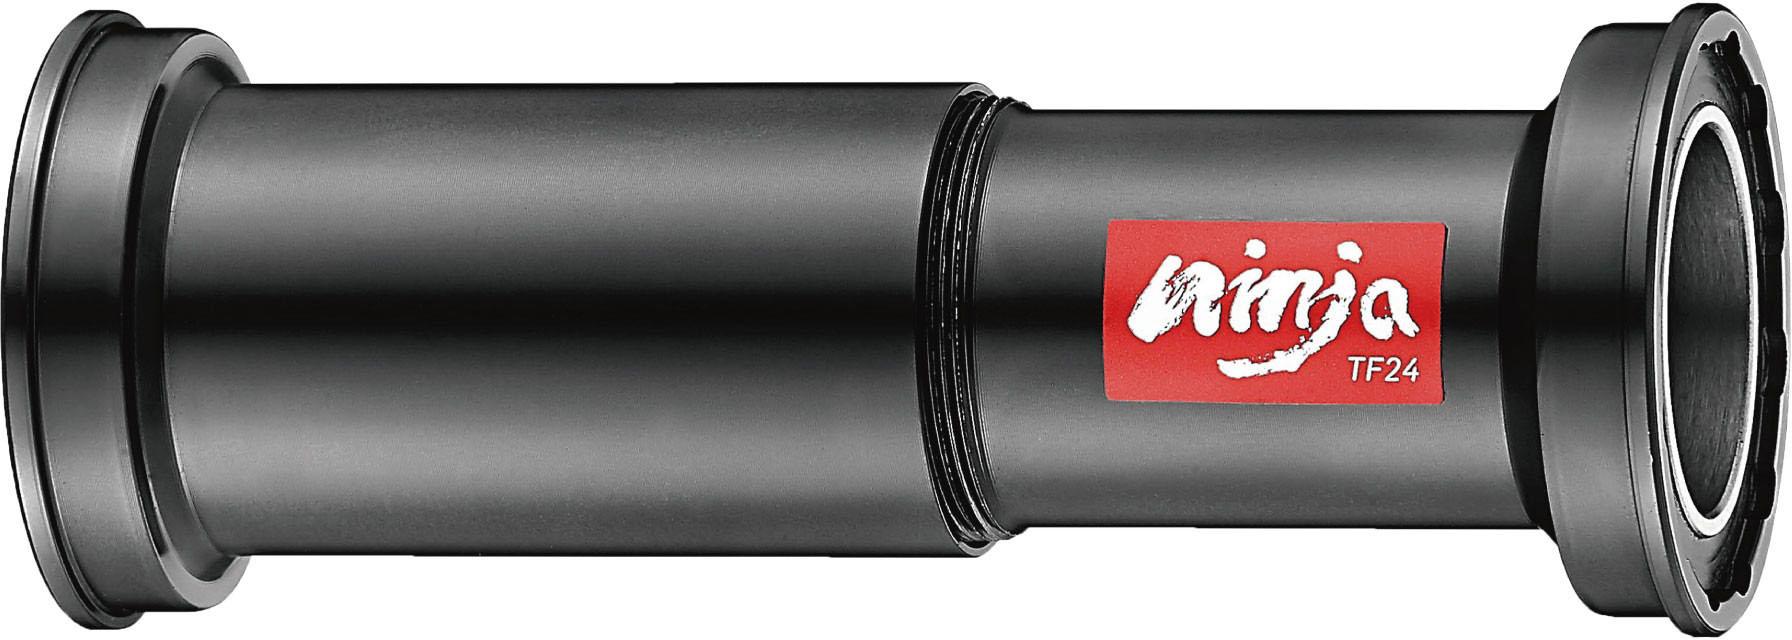 Token Ninja Trek Bb90/bb95 Oversize 24mm Axle Bottom Bra - Black